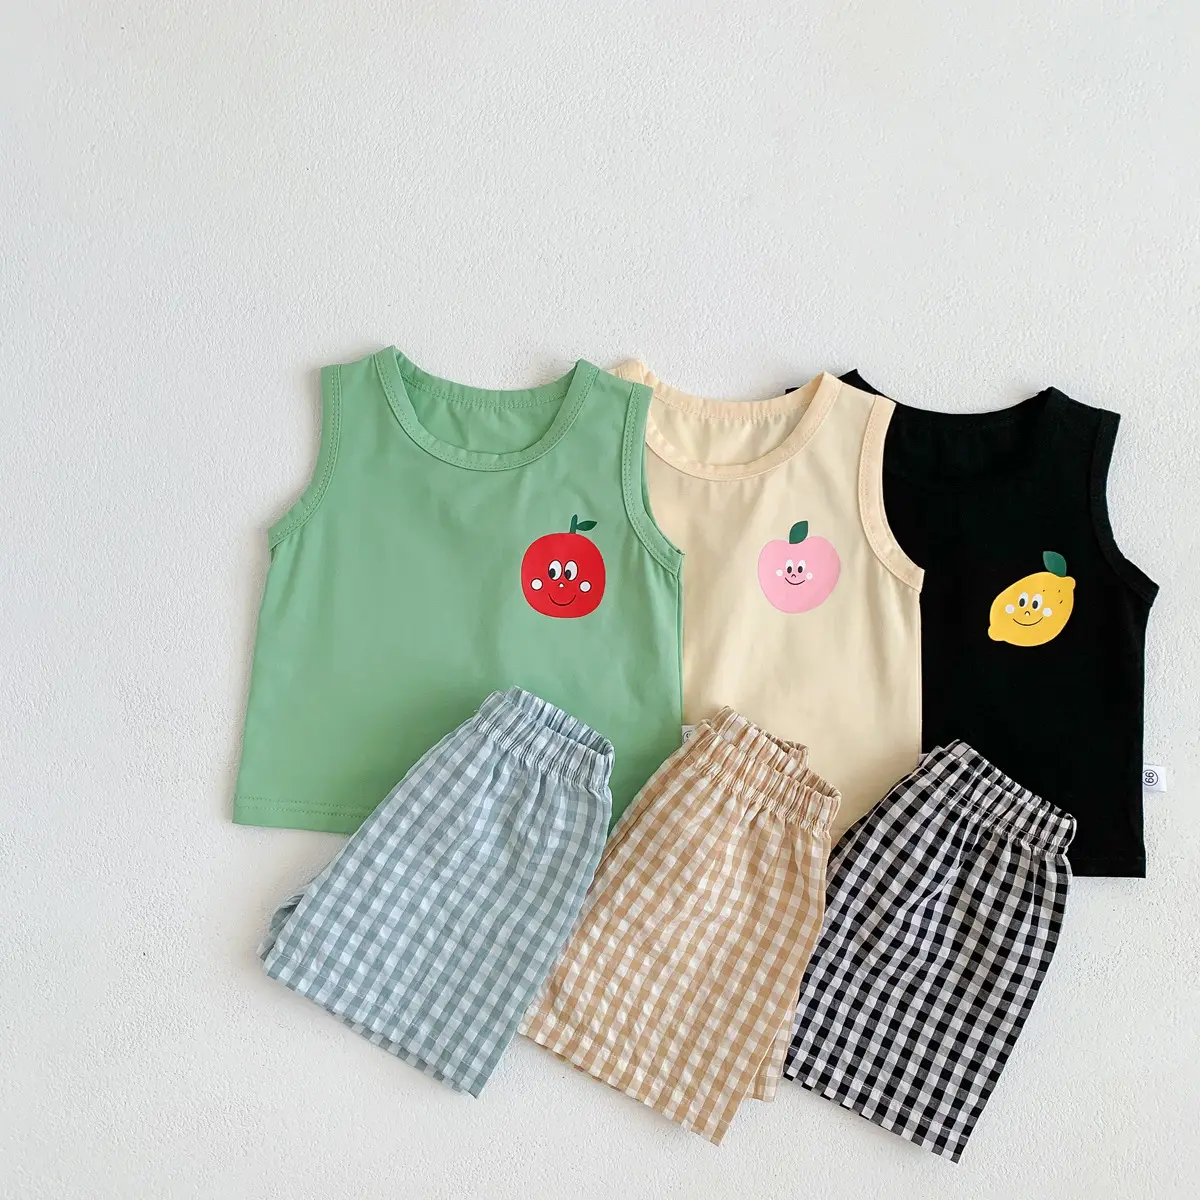 Ins Boutique Summer Infant Children Suit 2pcs Top and Shorts Cartoon Unisex Baby Boy Girl Clothes Set